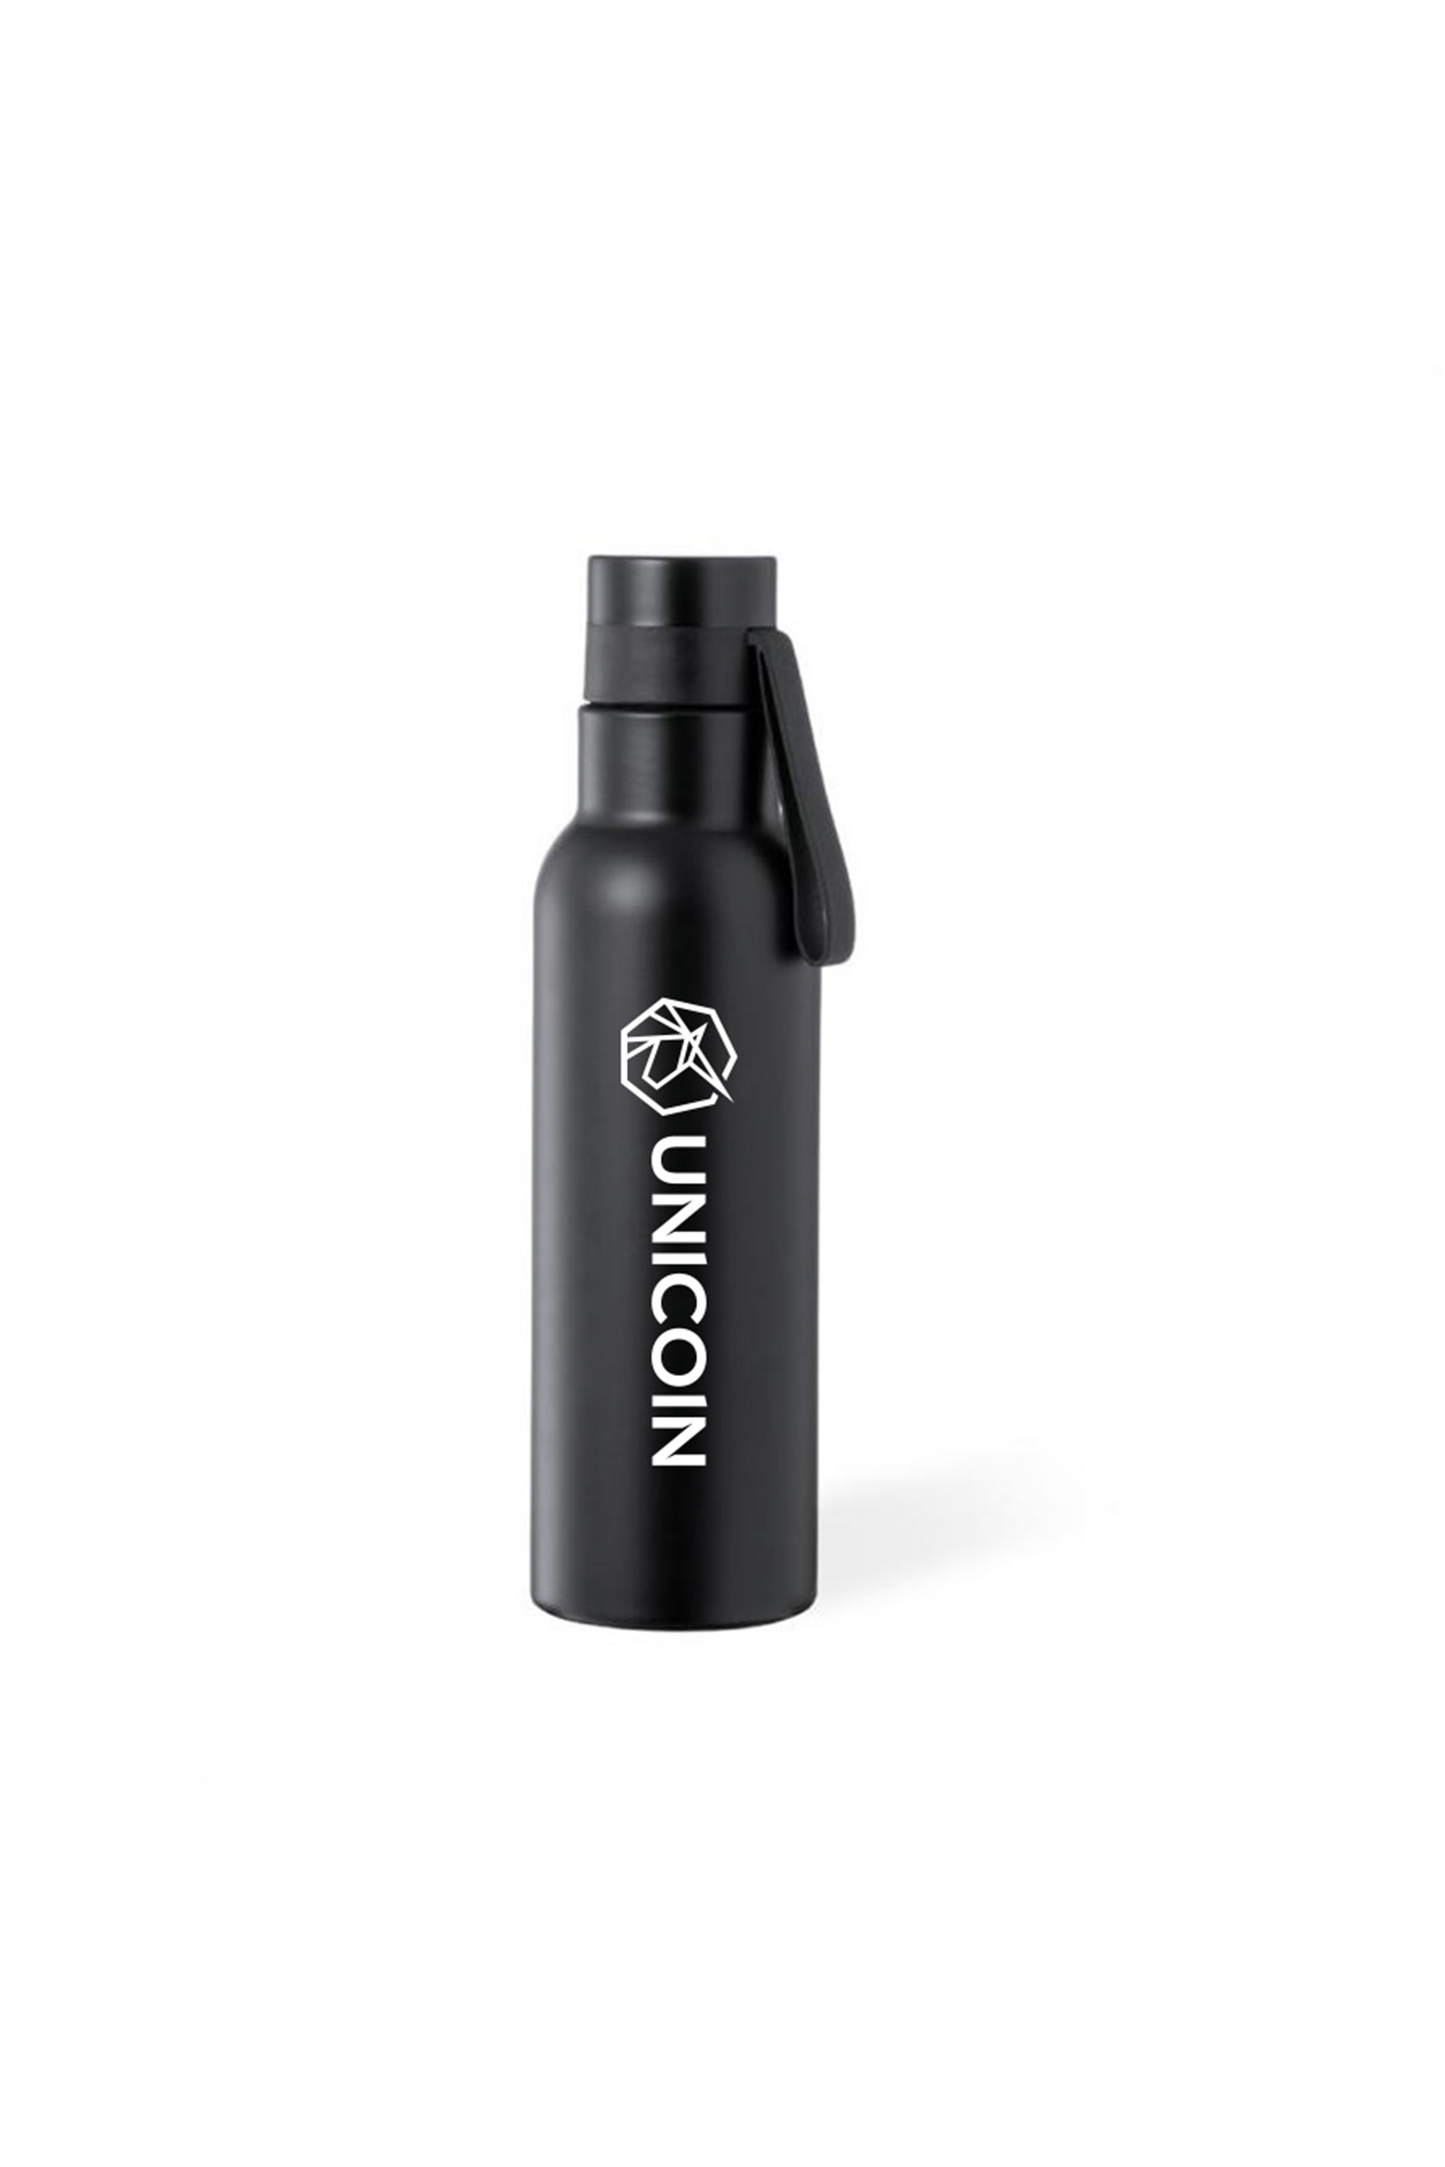 UNICOIN 17 oz Water Bottle (Black)